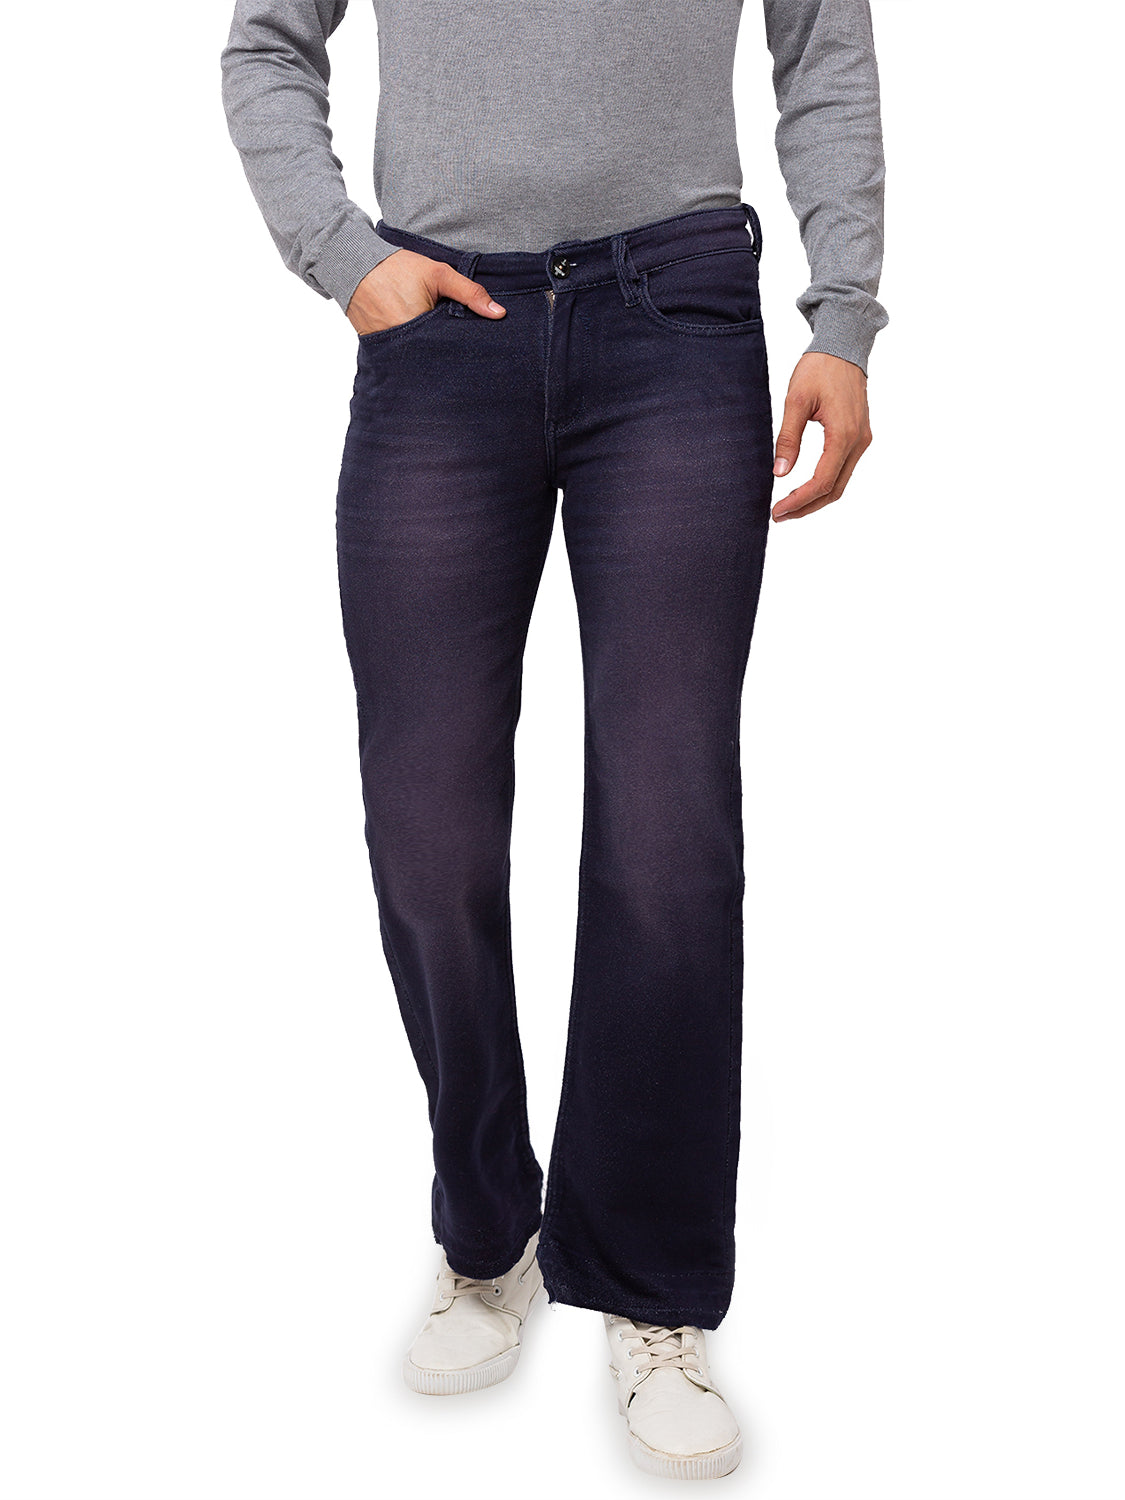 Men's Navy Blue Bootcut Jeans